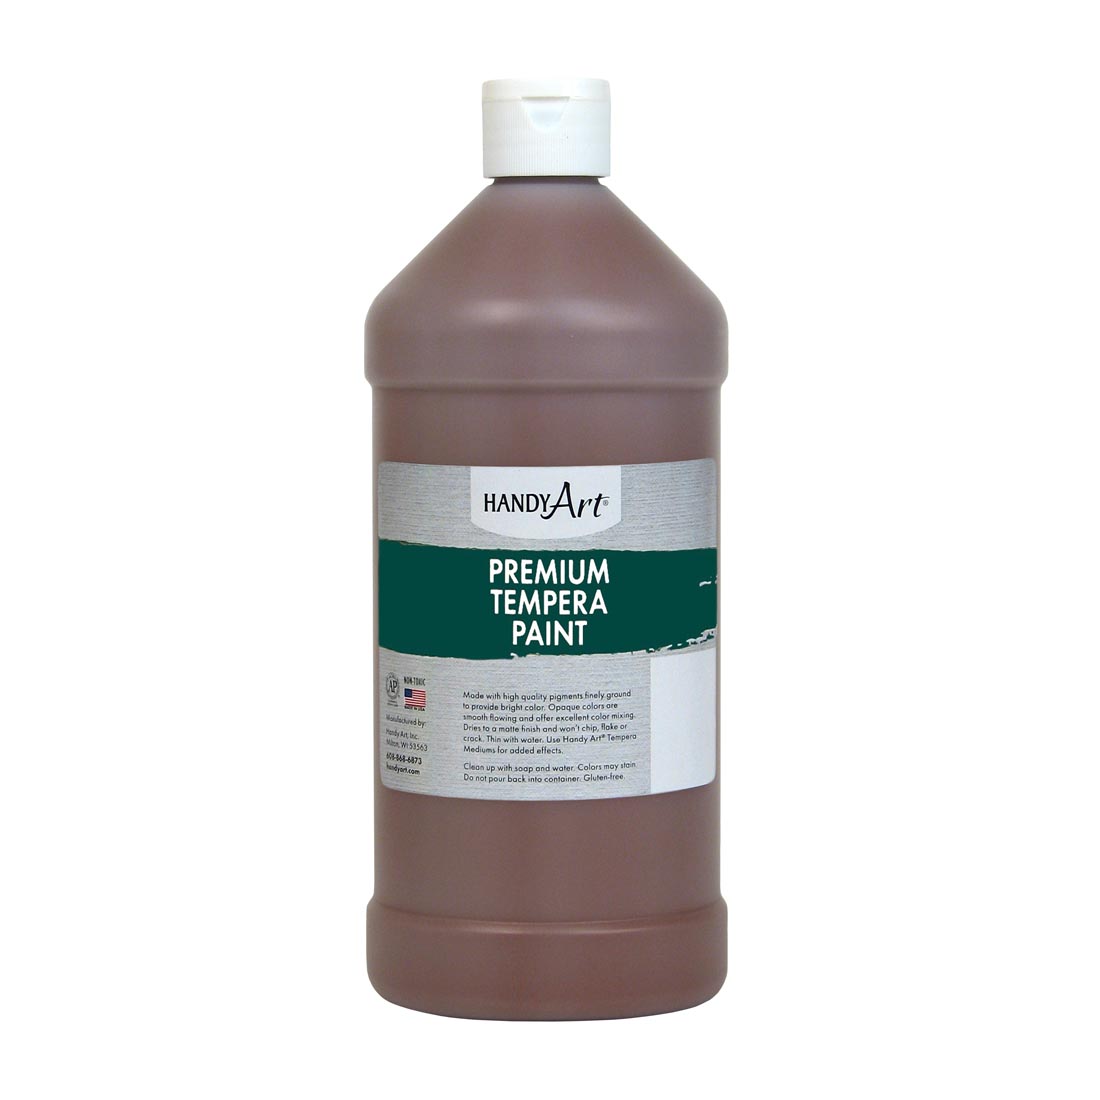 Quart bottle of Brown Handy Art Premium Tempera Paint